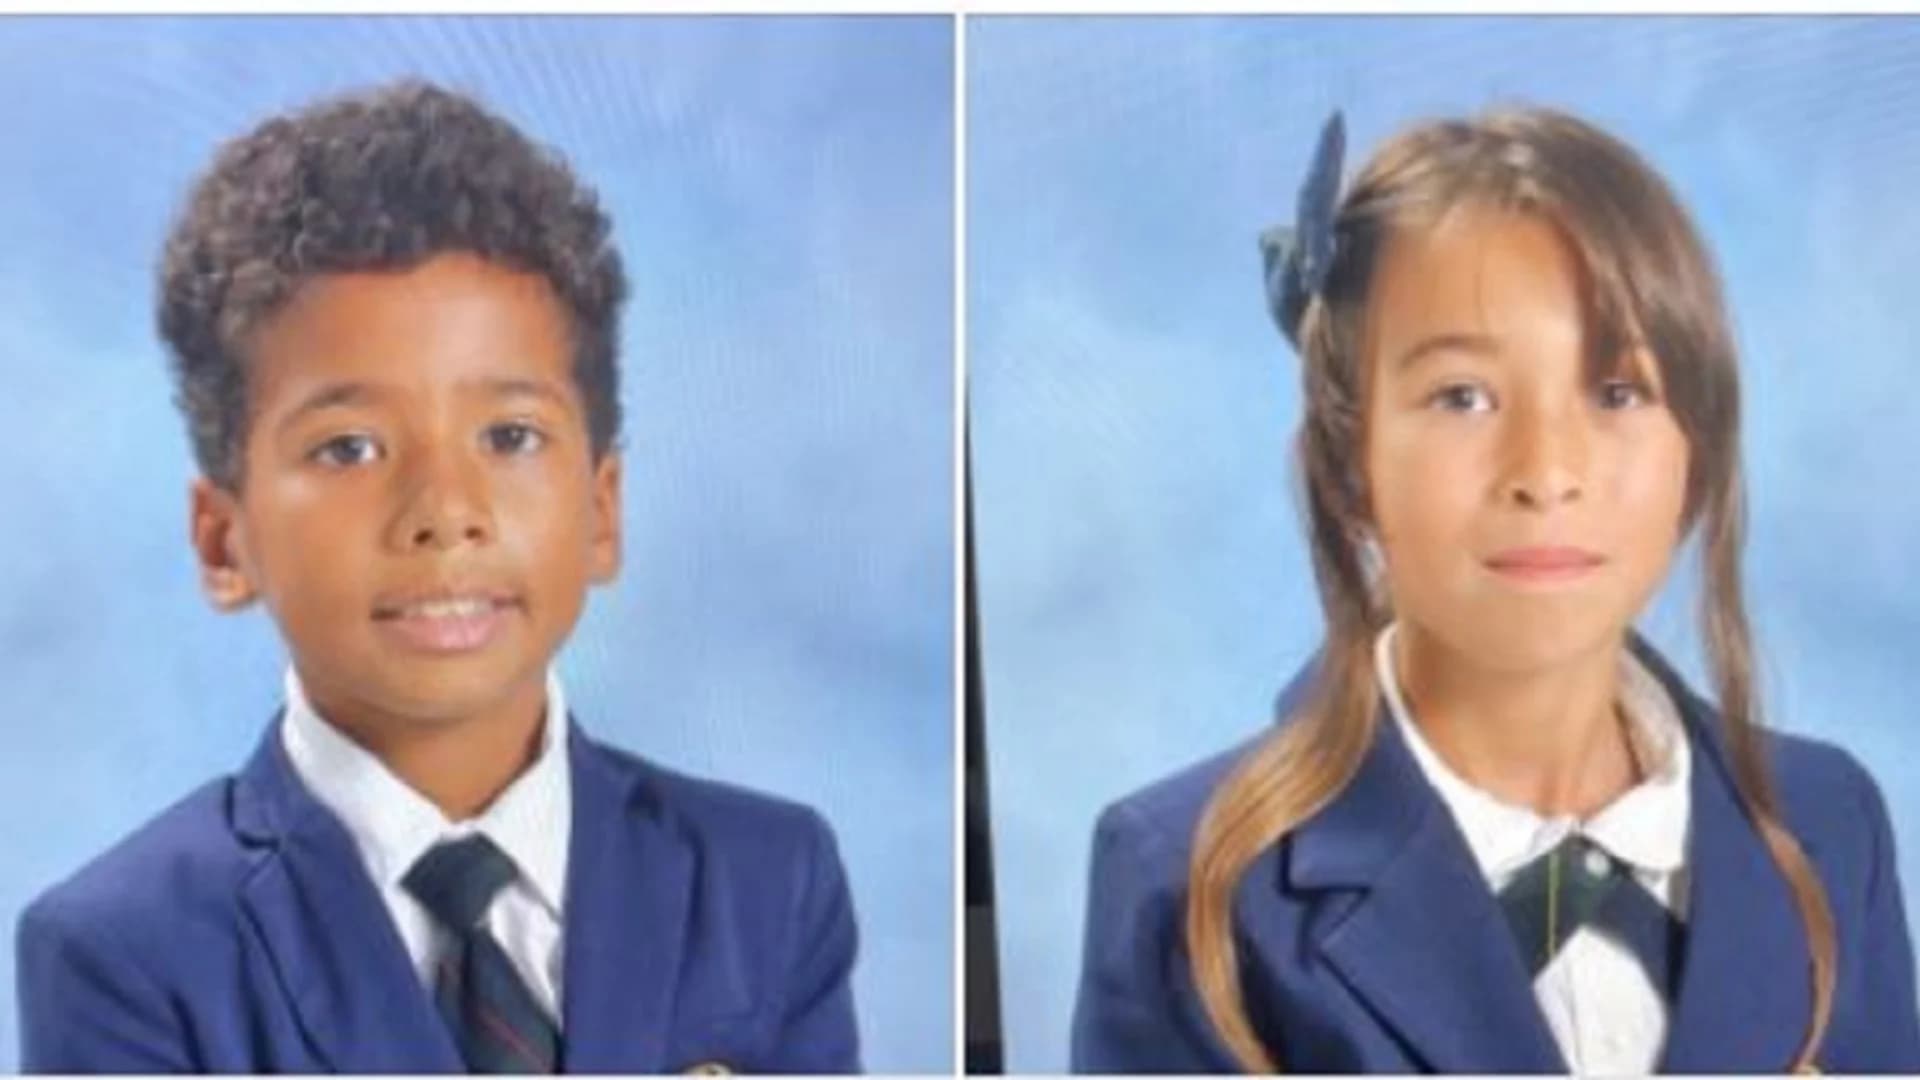 Police: 2 children reported missing in Vineland found safe